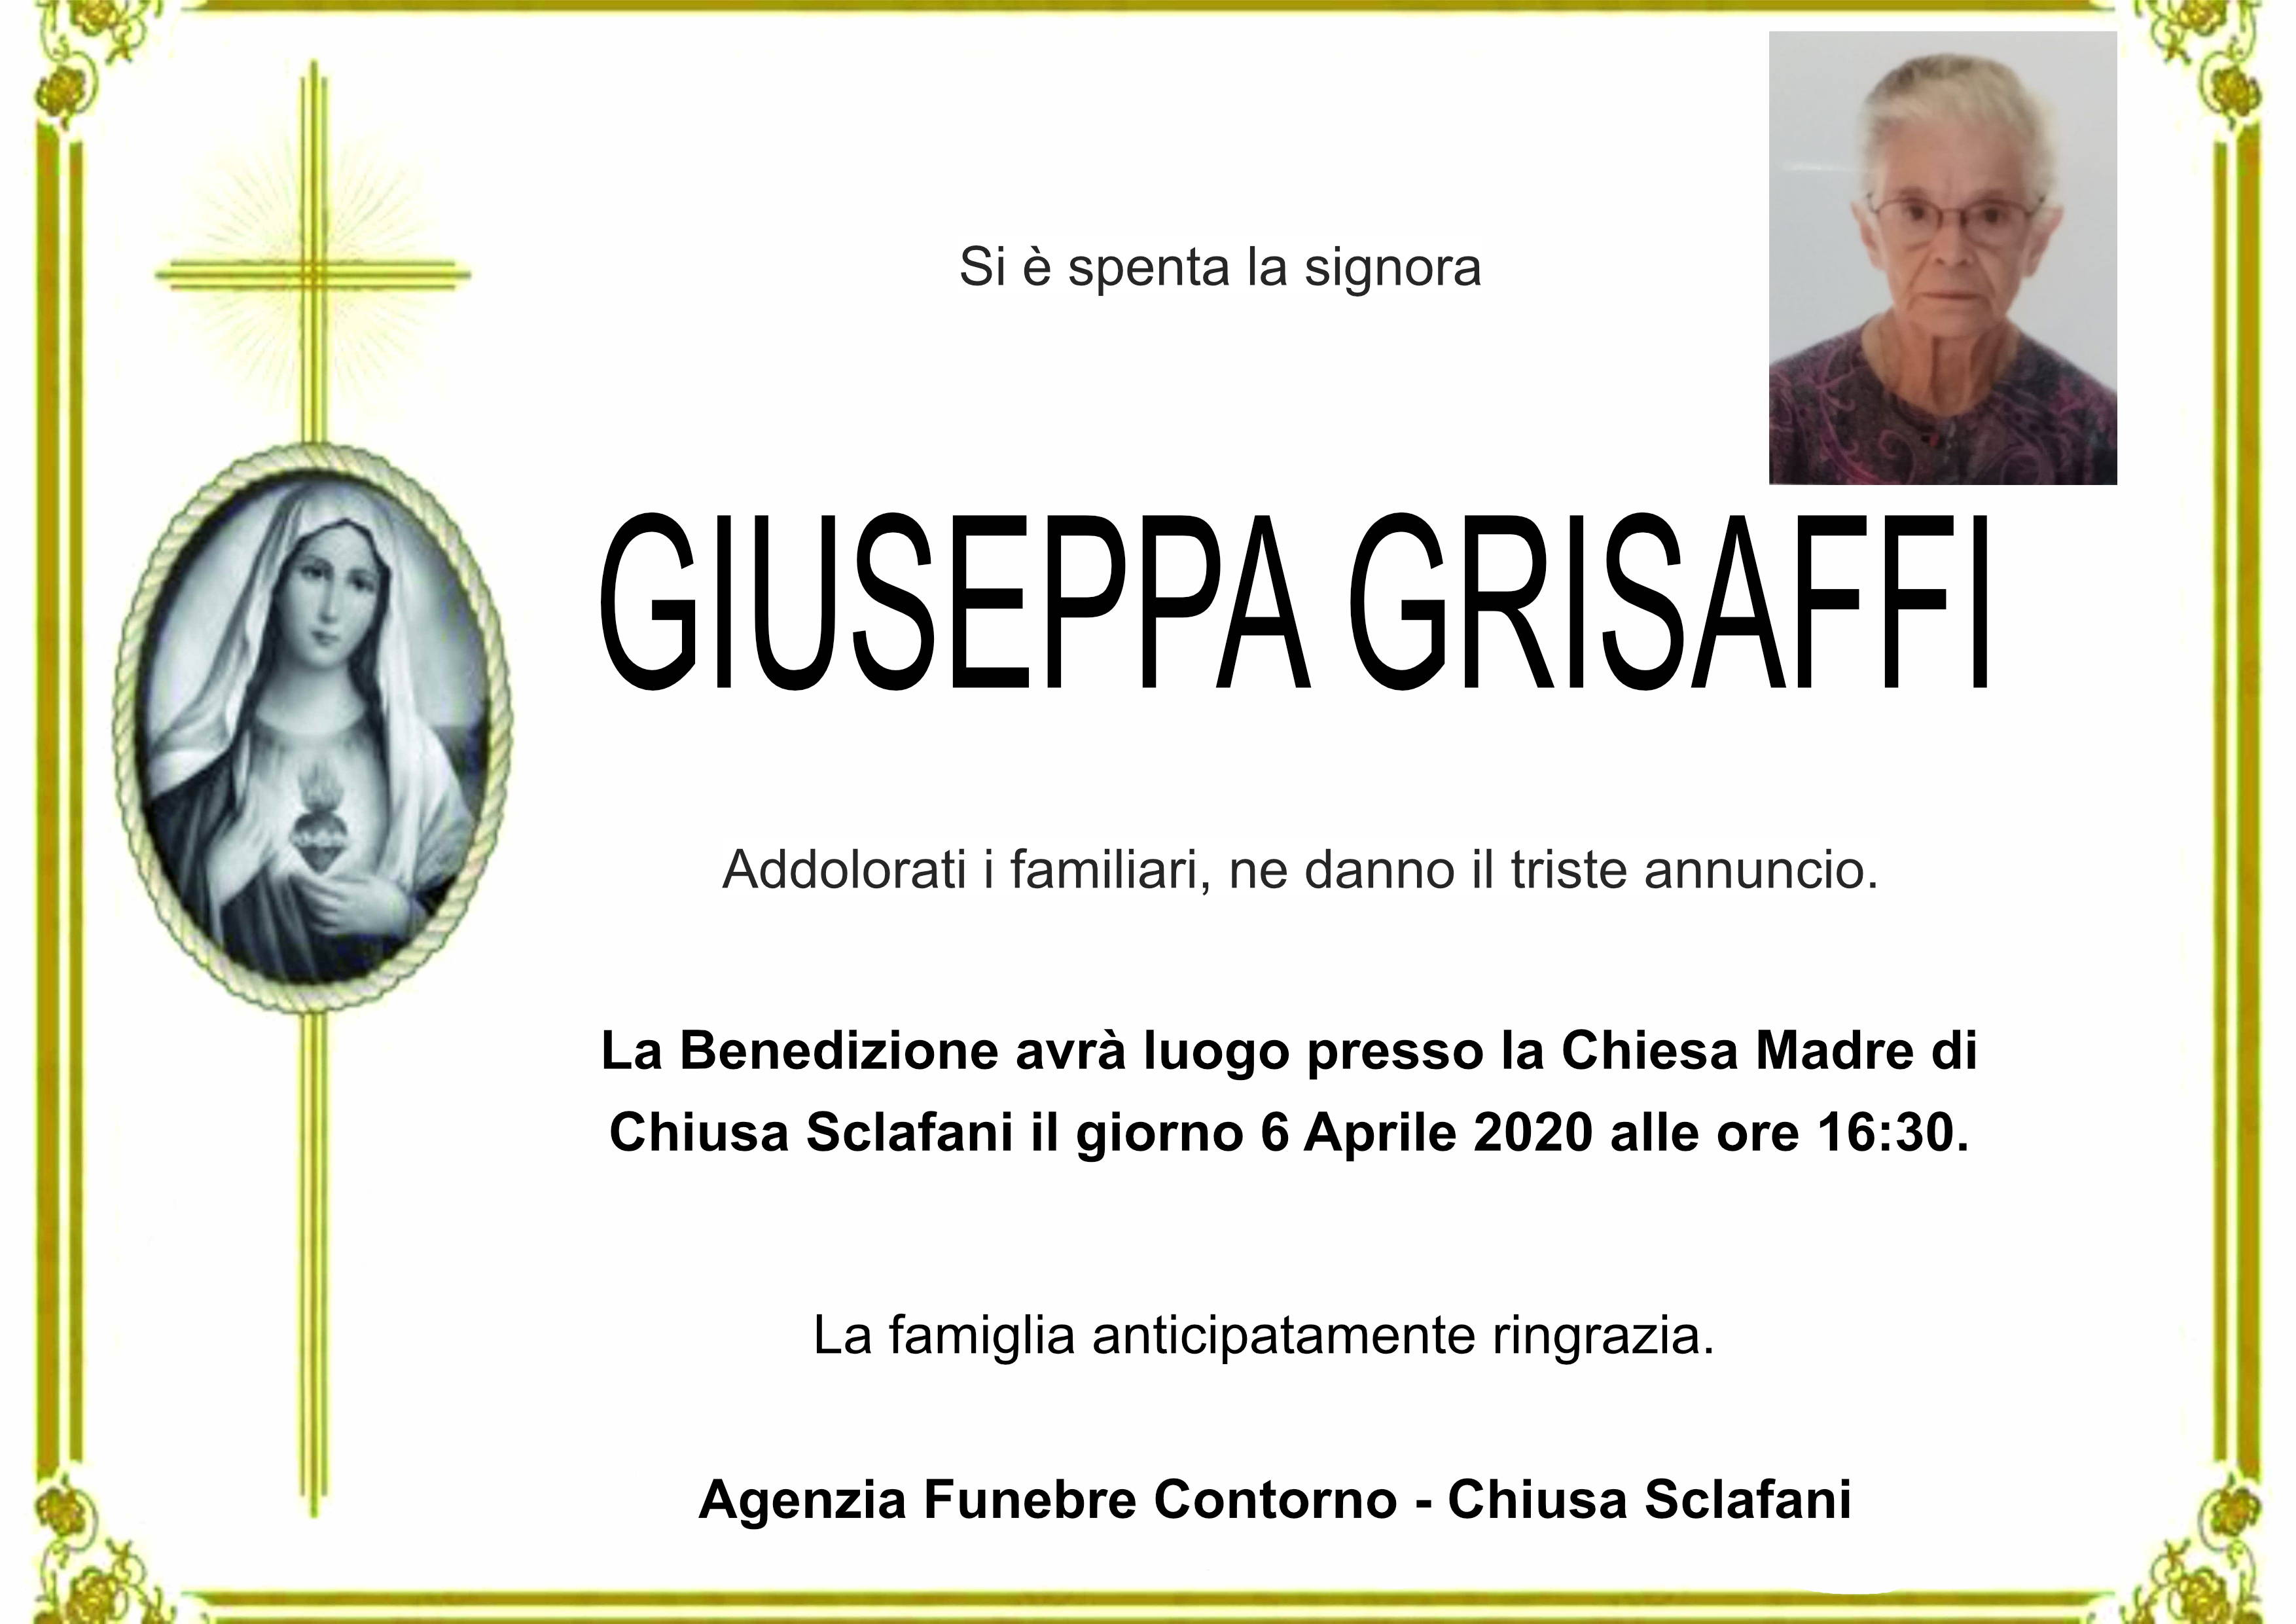 Giuseppa Grisaffi